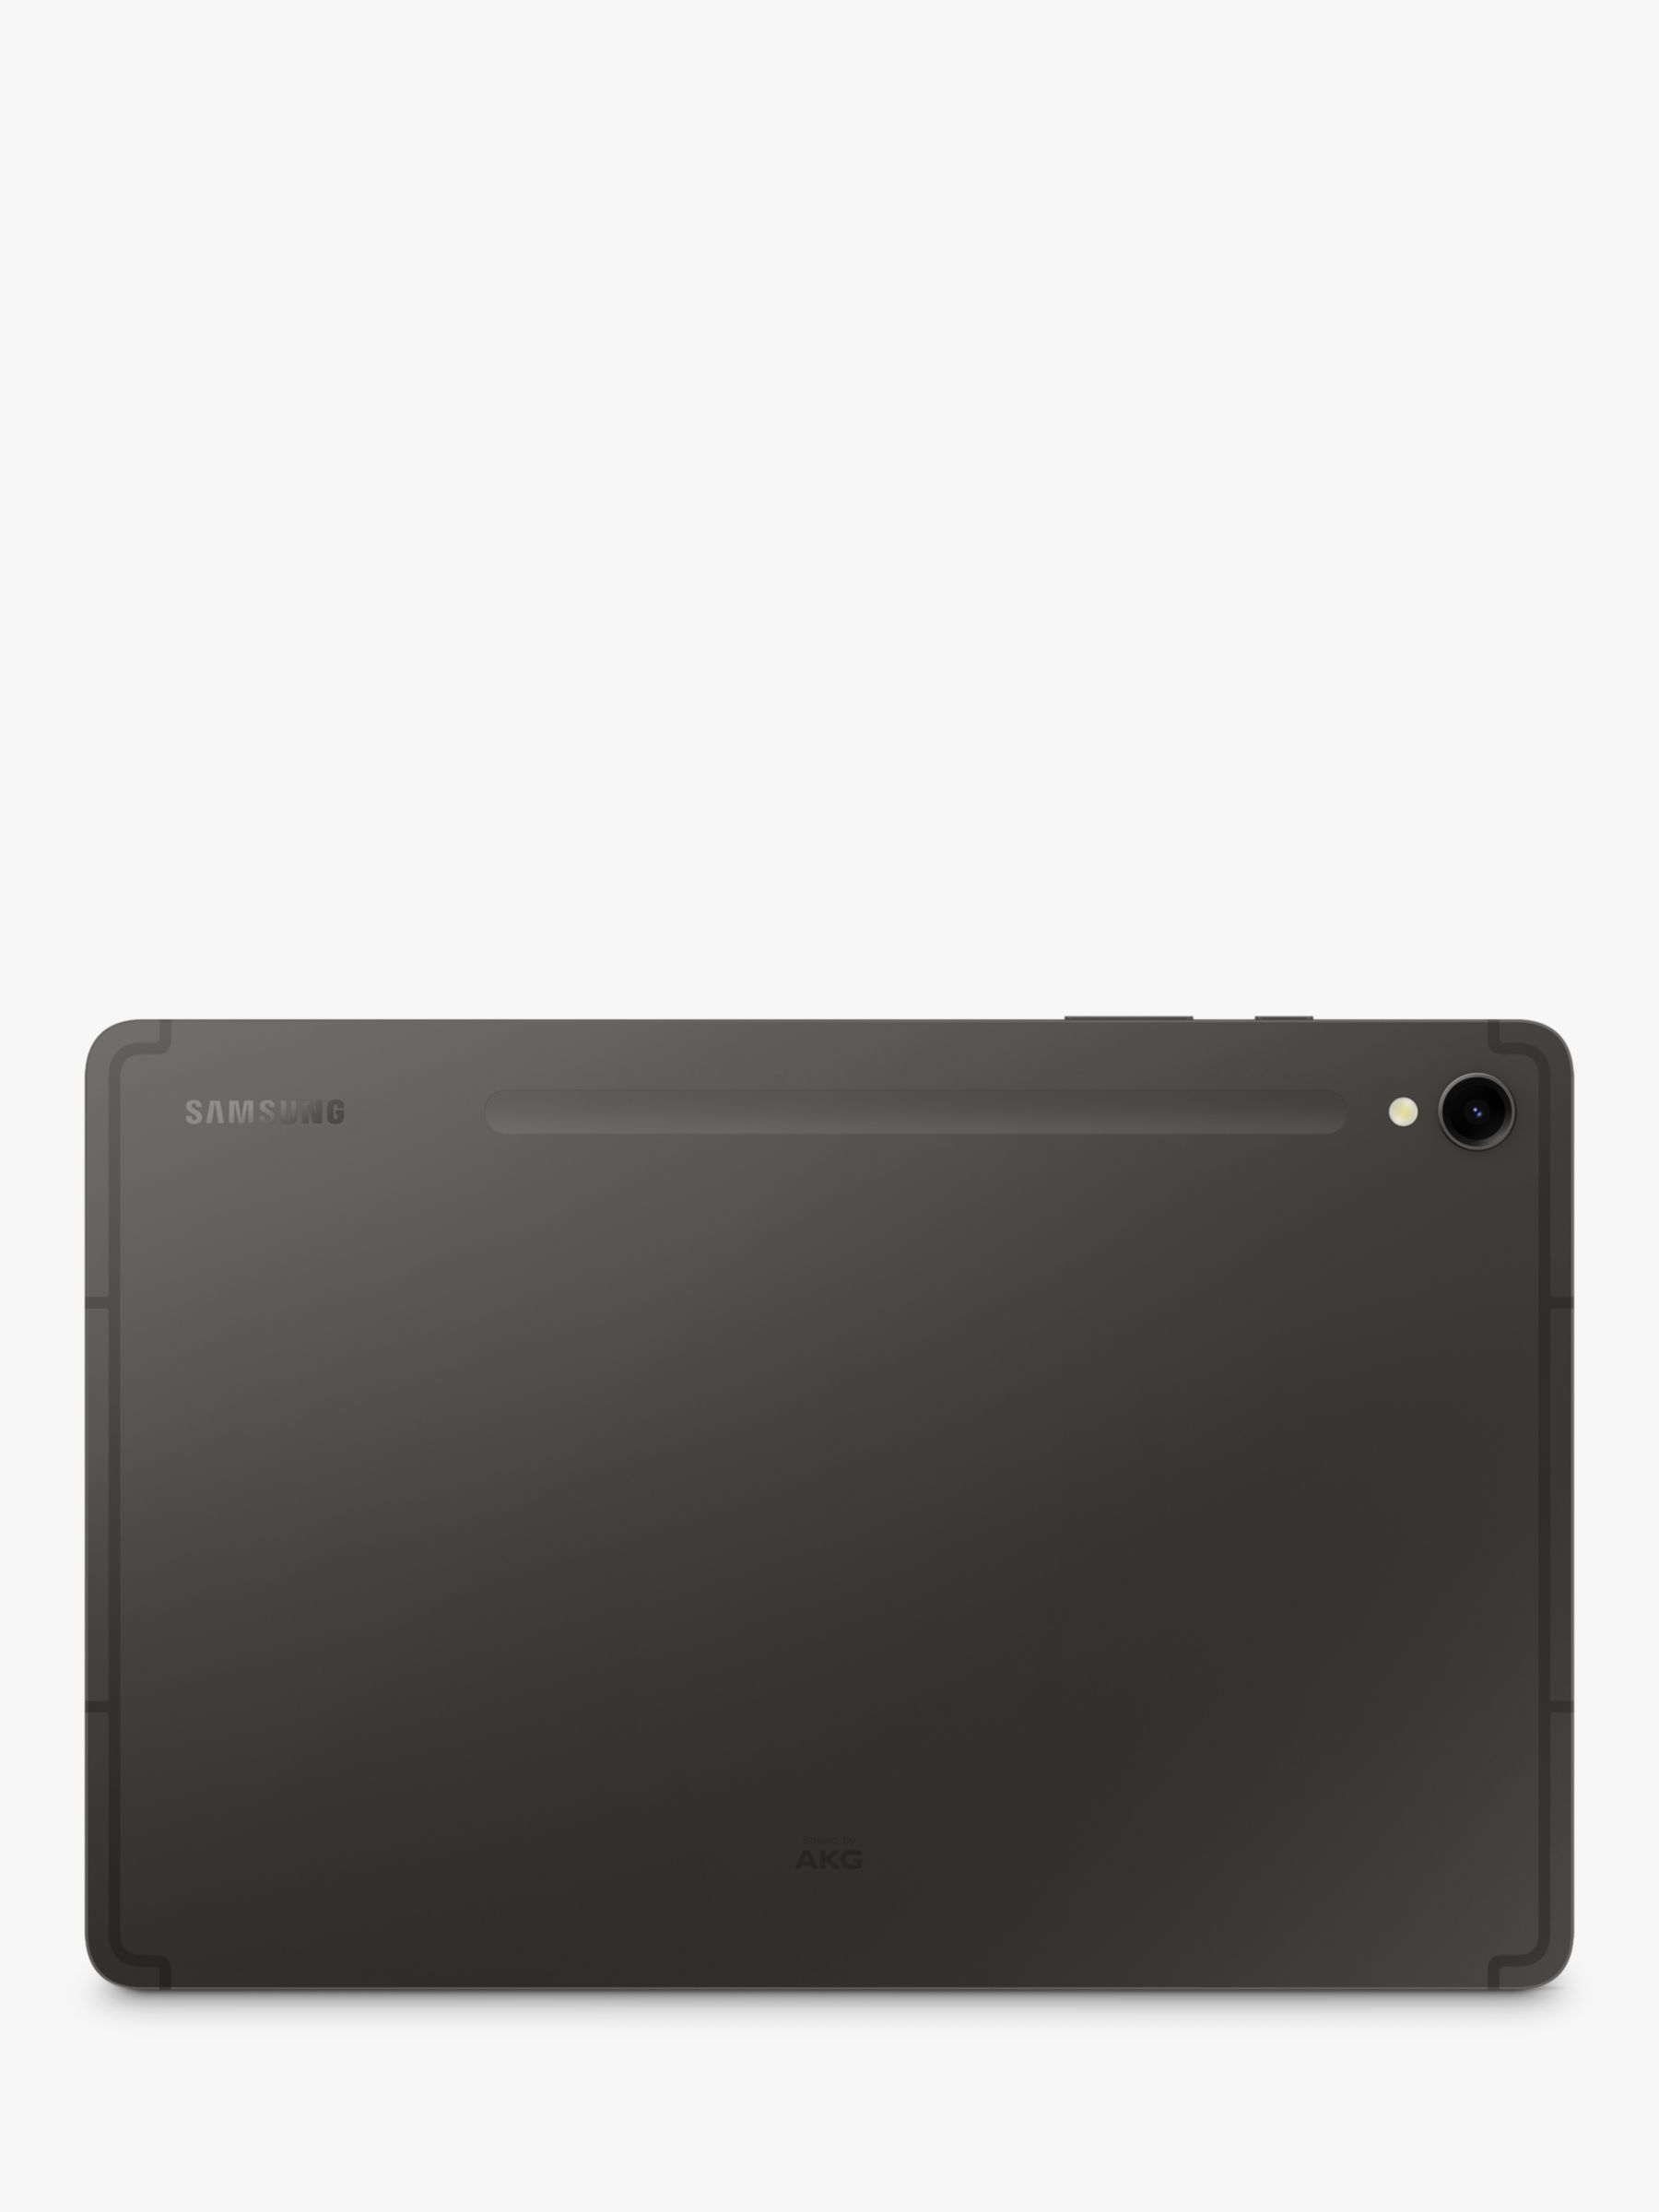 Samsung Galaxy Tab S7 Wi-Fi, Mystic Black - 256 GB (Renewed)